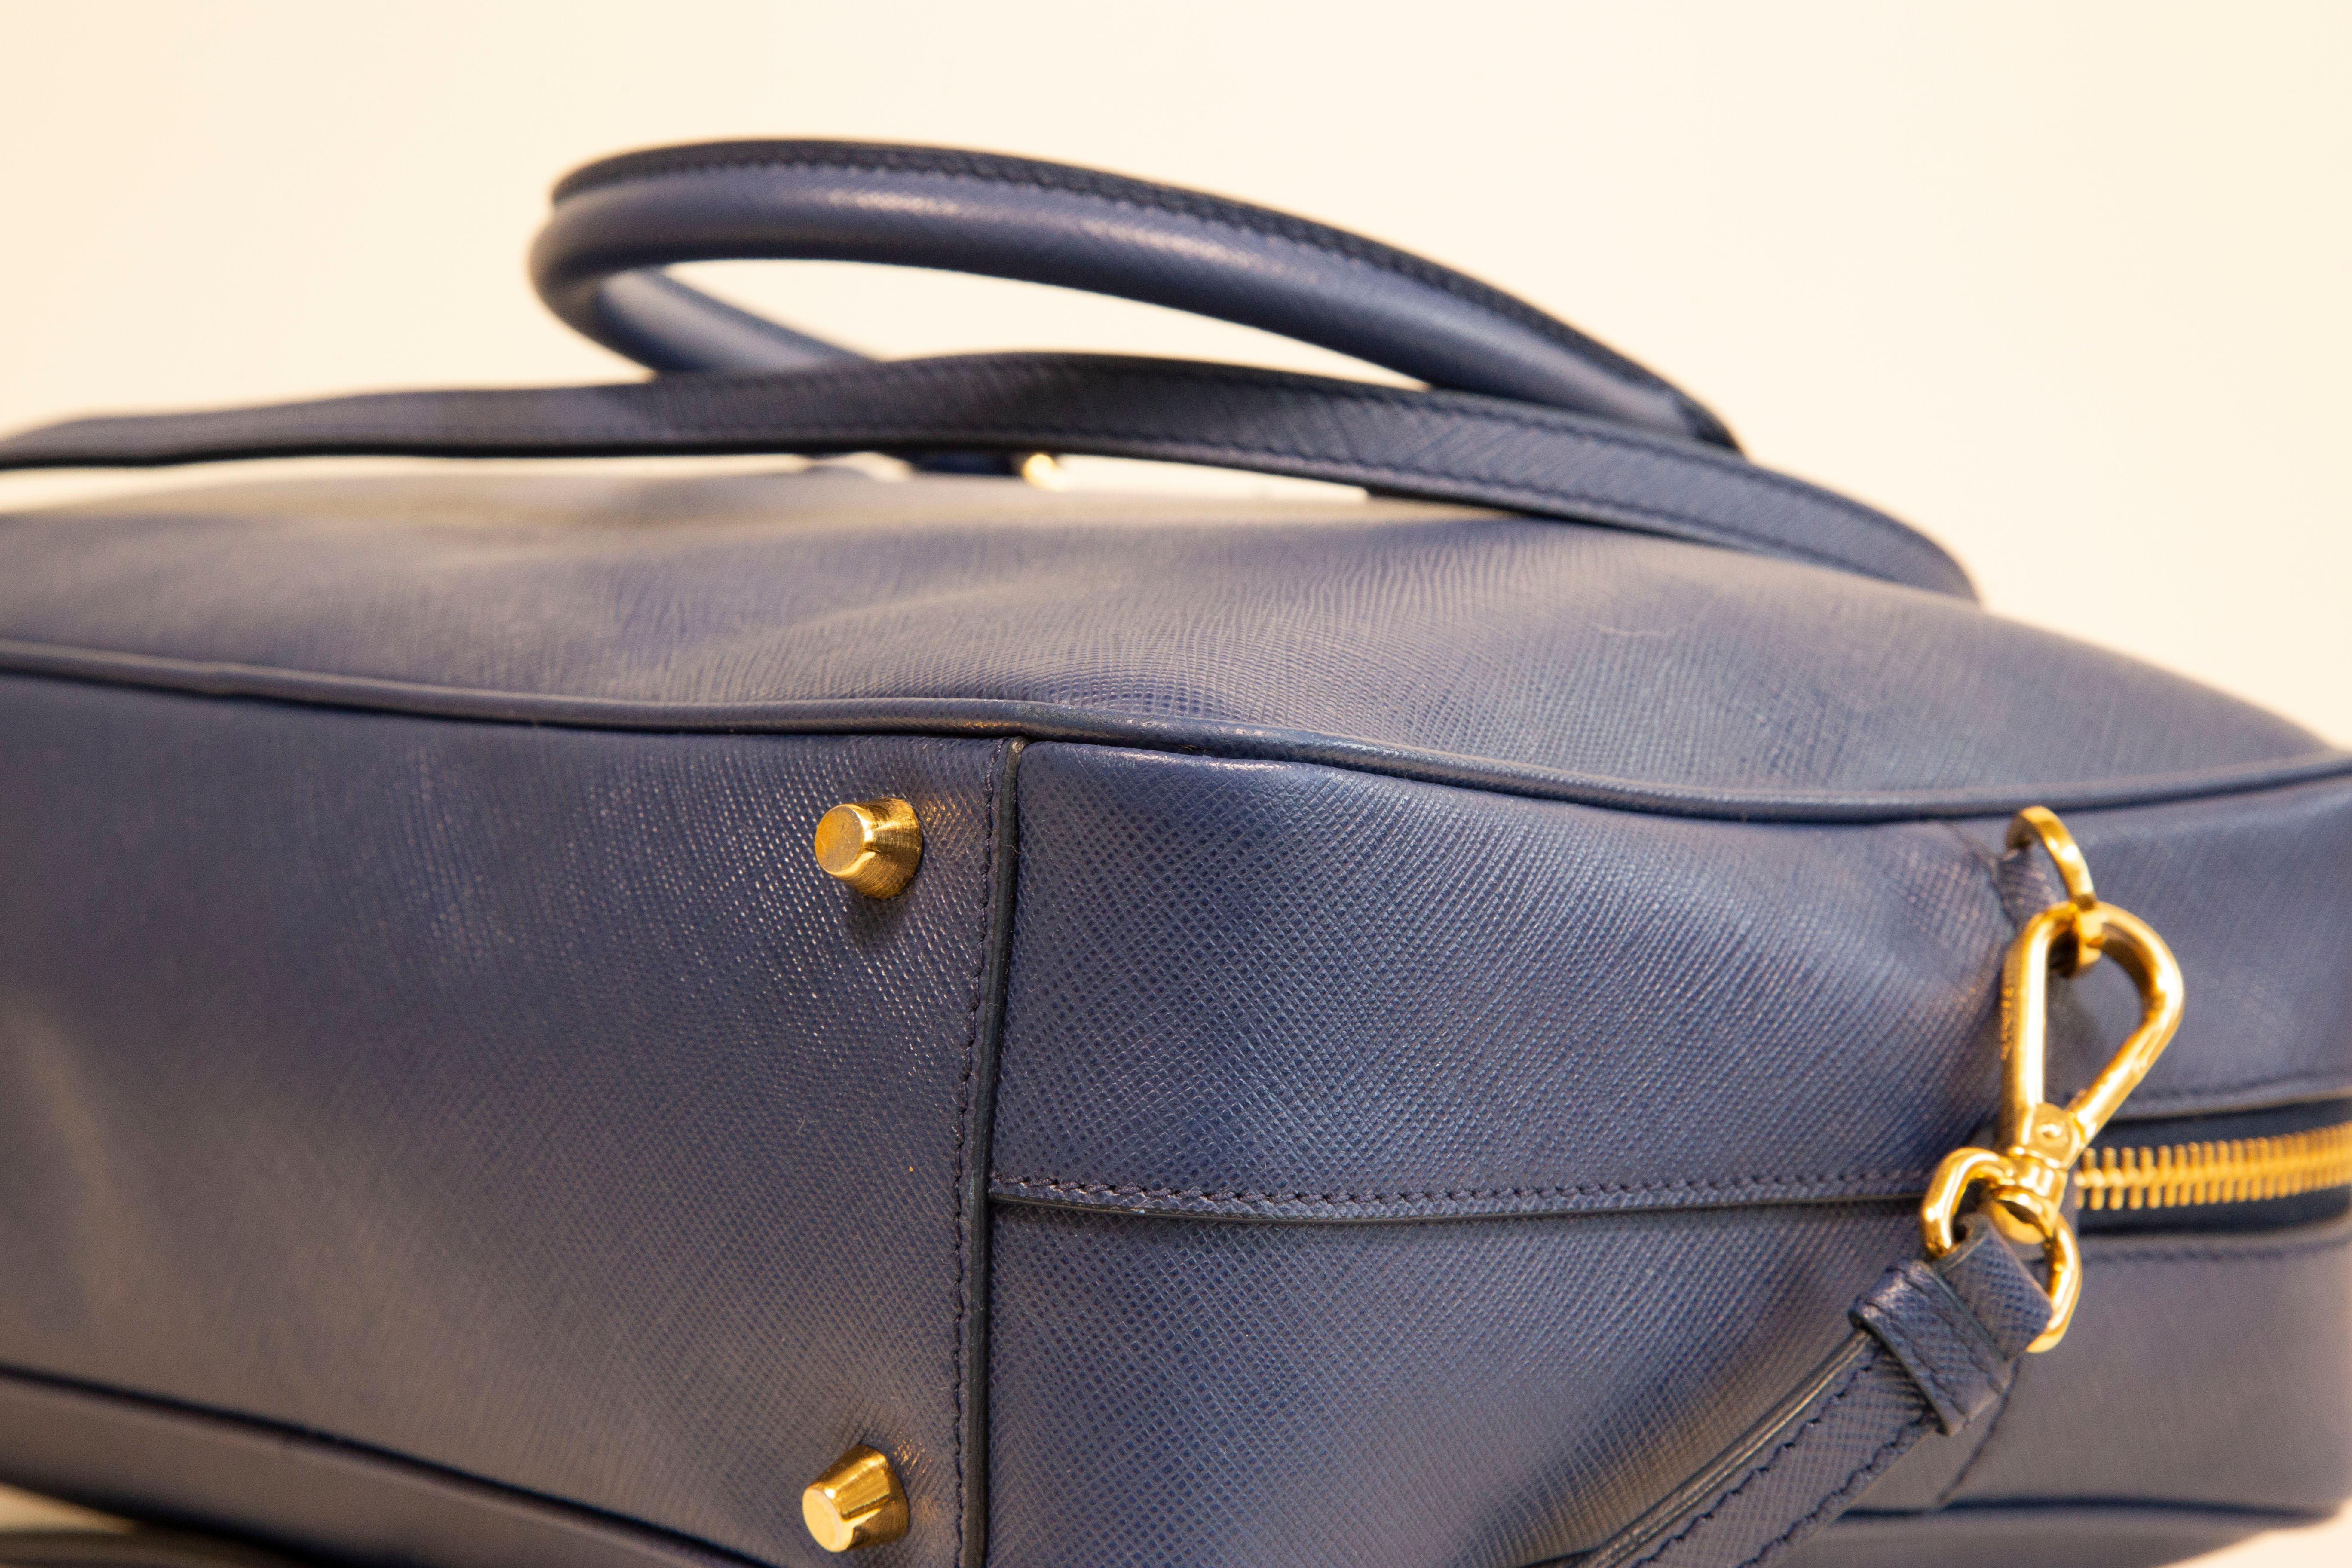  Prada Galleria Two Way Bag in Blue Saffiano Leather 9